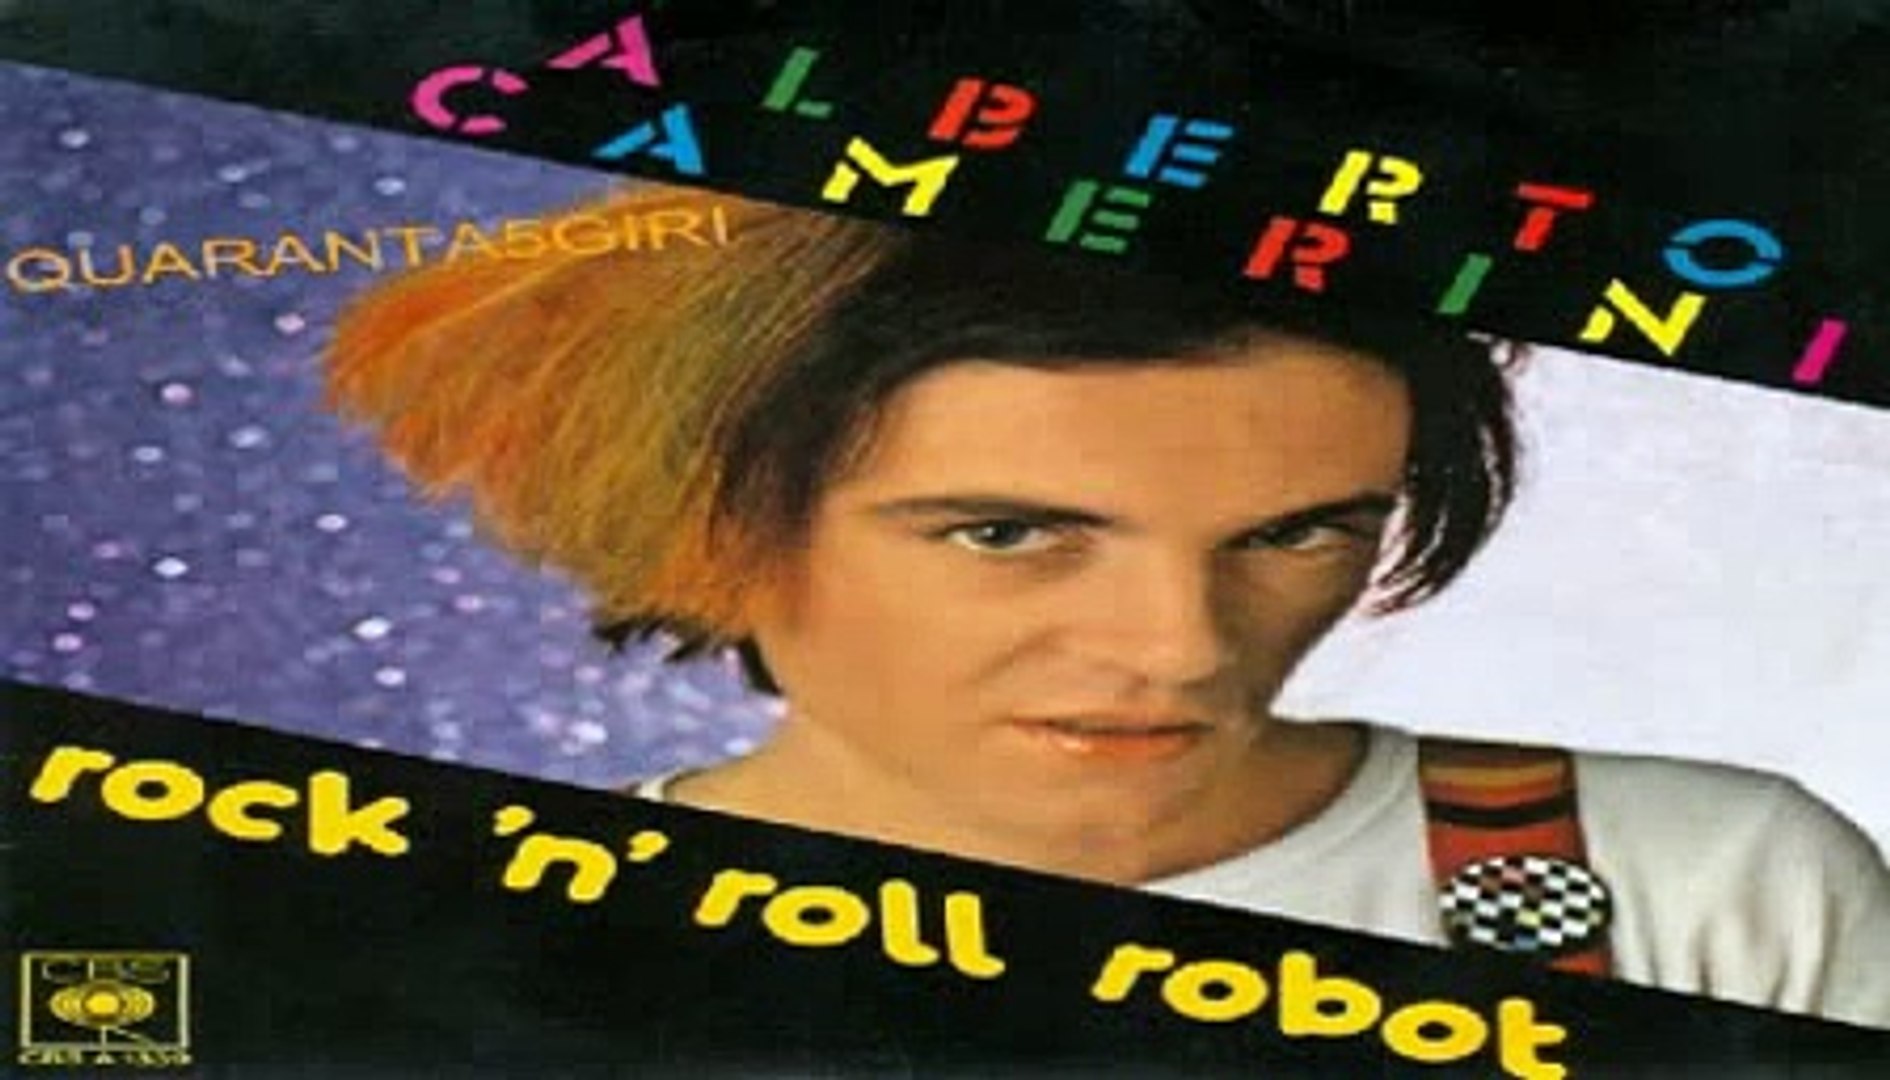 Rock 'N' Roll Robot / Miele Alberto Camerini 1981 (Facciate:2) - Video  Dailymotion